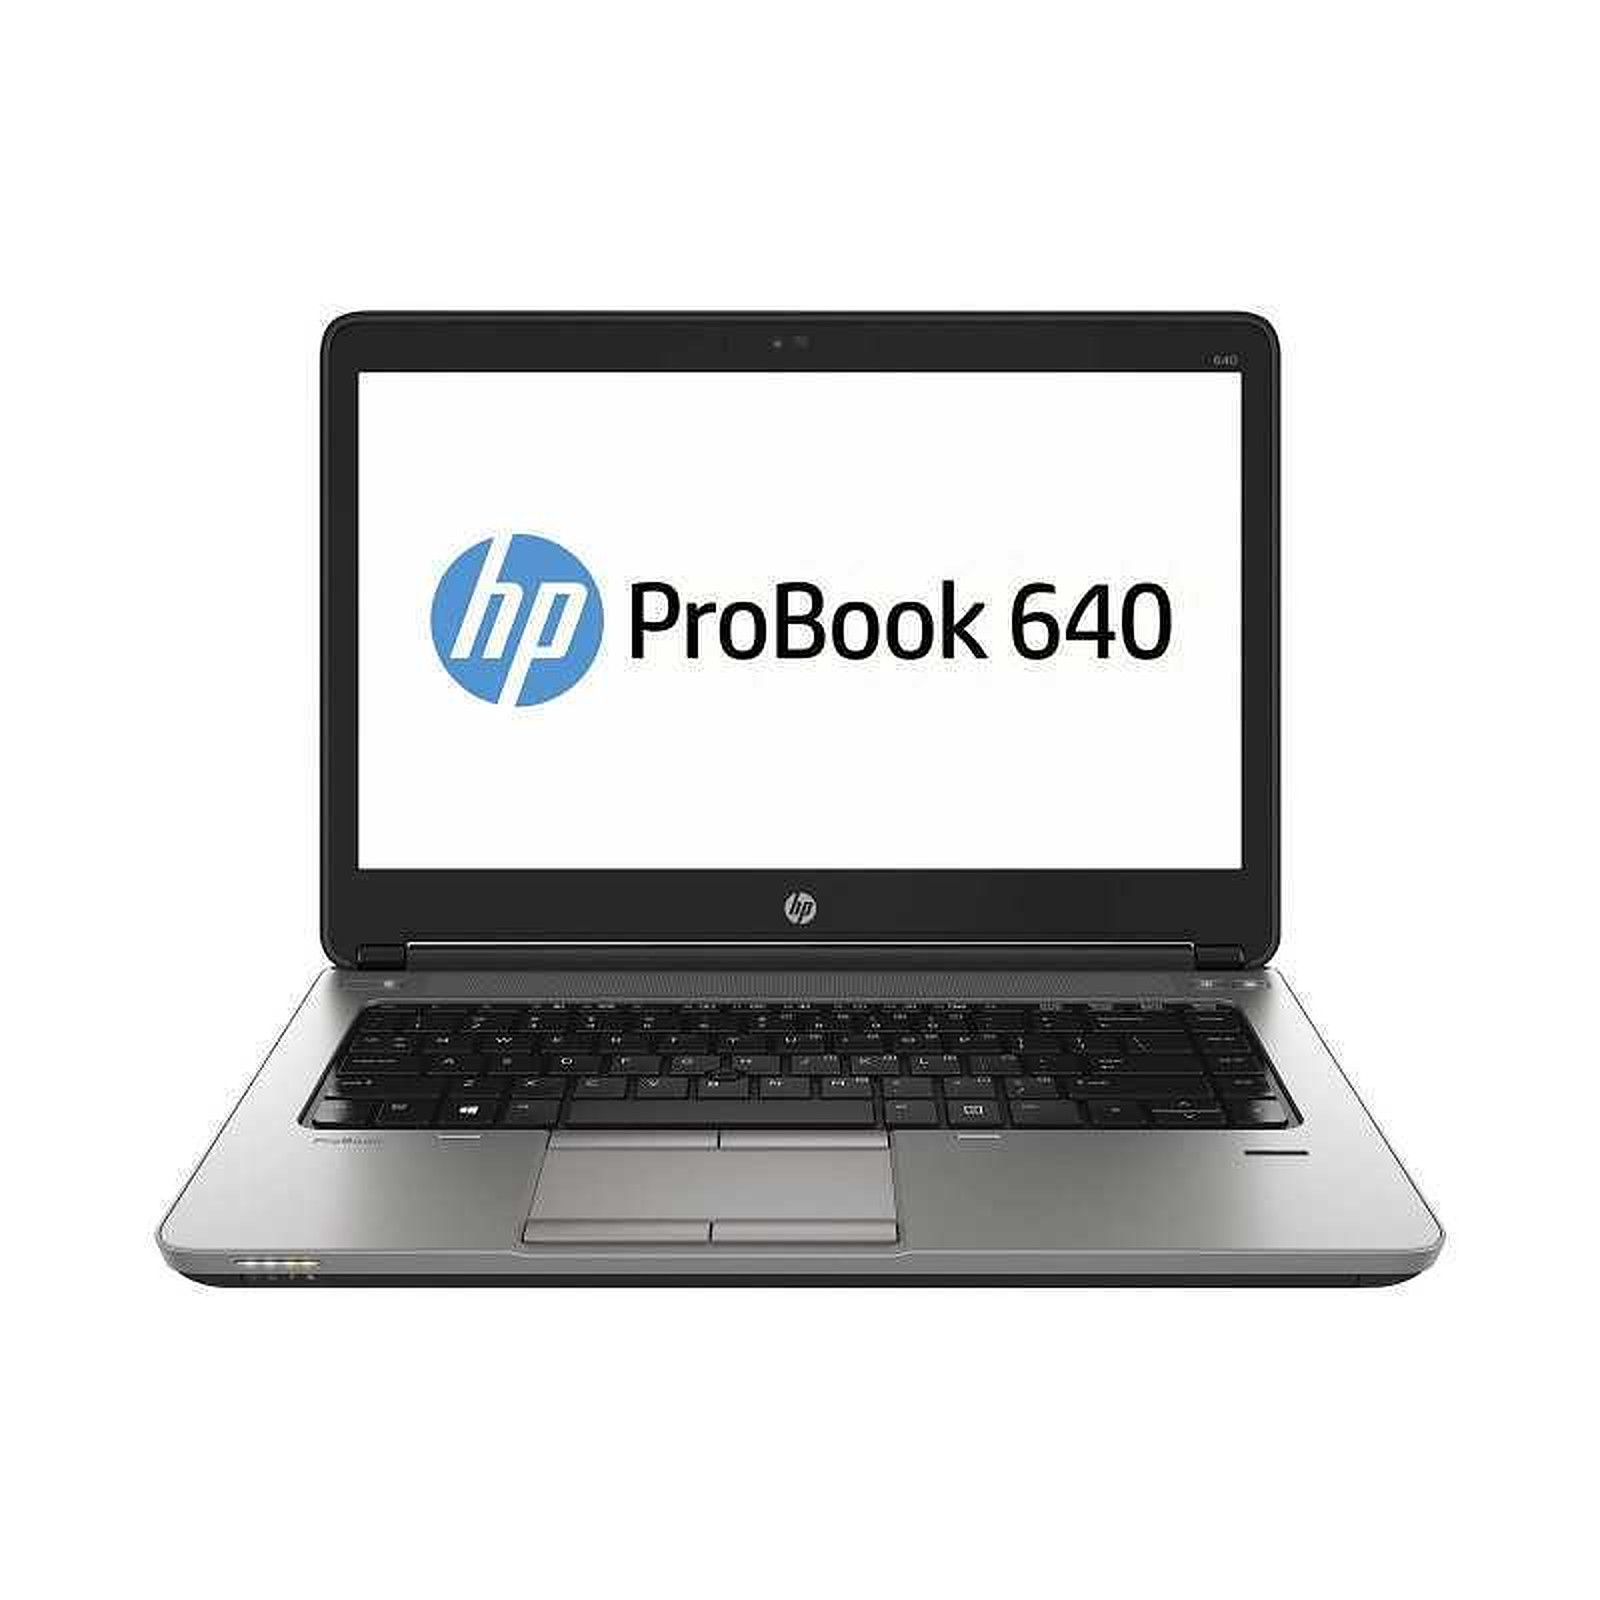 HP ProBook 640 G1 (D9R53AV-I3-B-5950) · Reconditionne - PC portable reconditionne HP